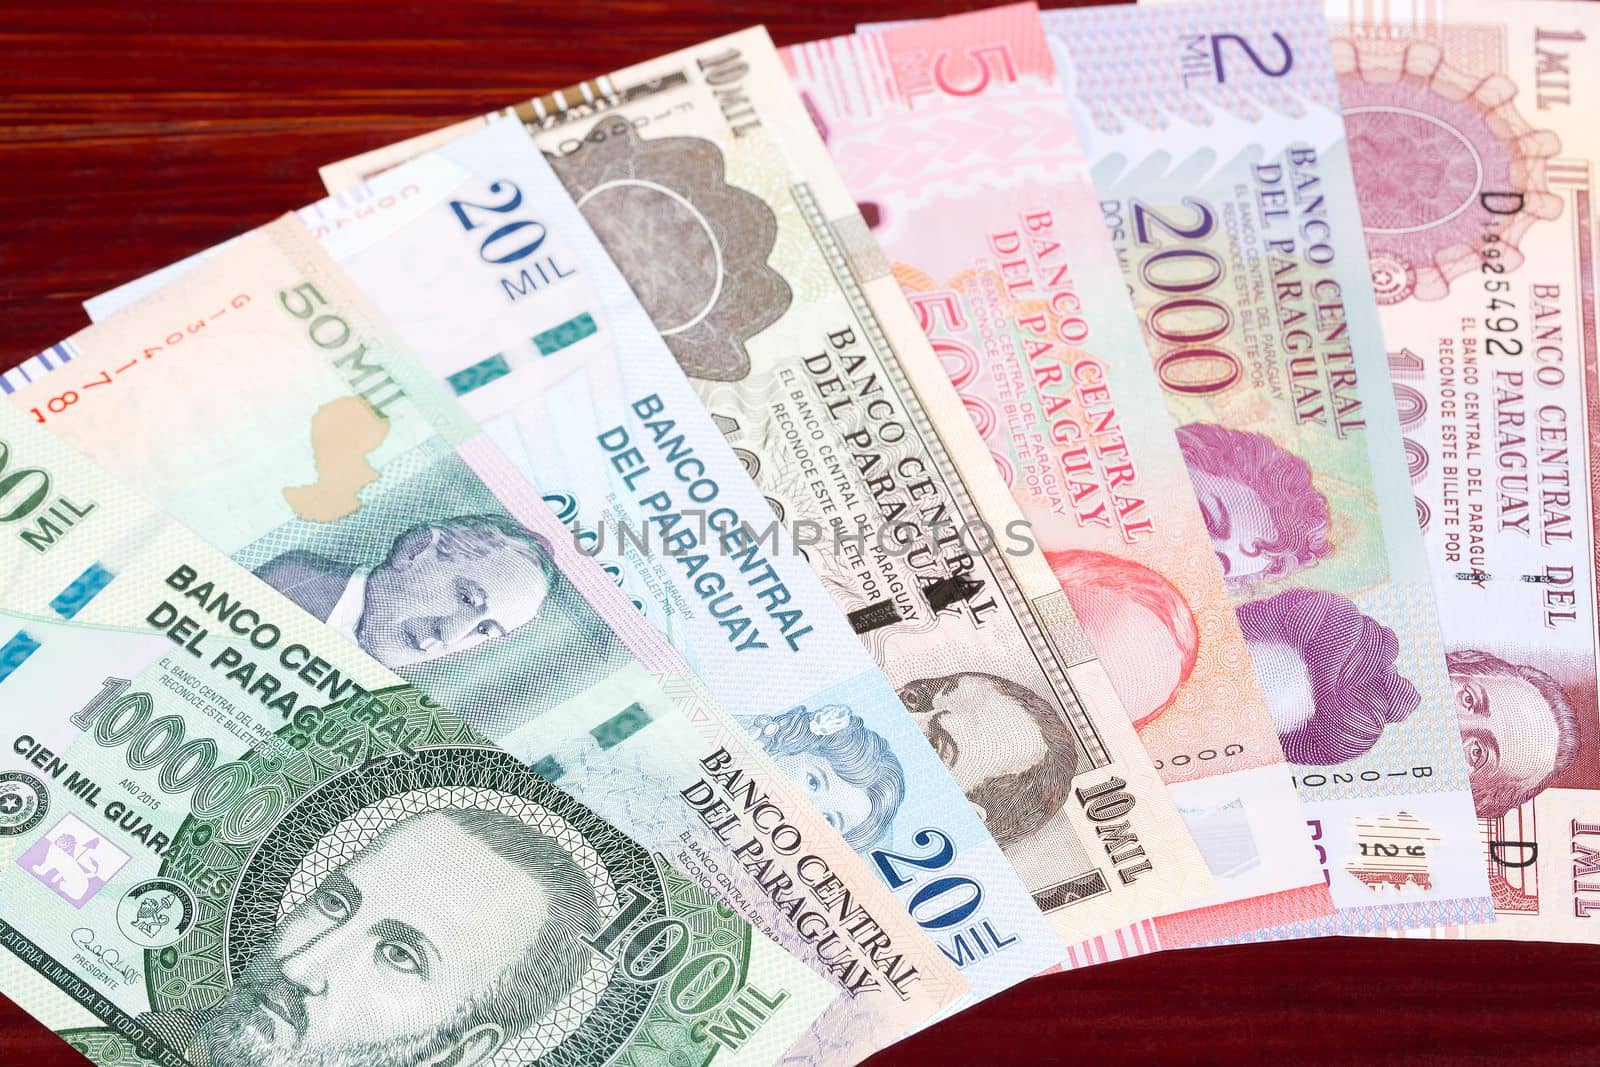 Paraguayan money a business background by johan10